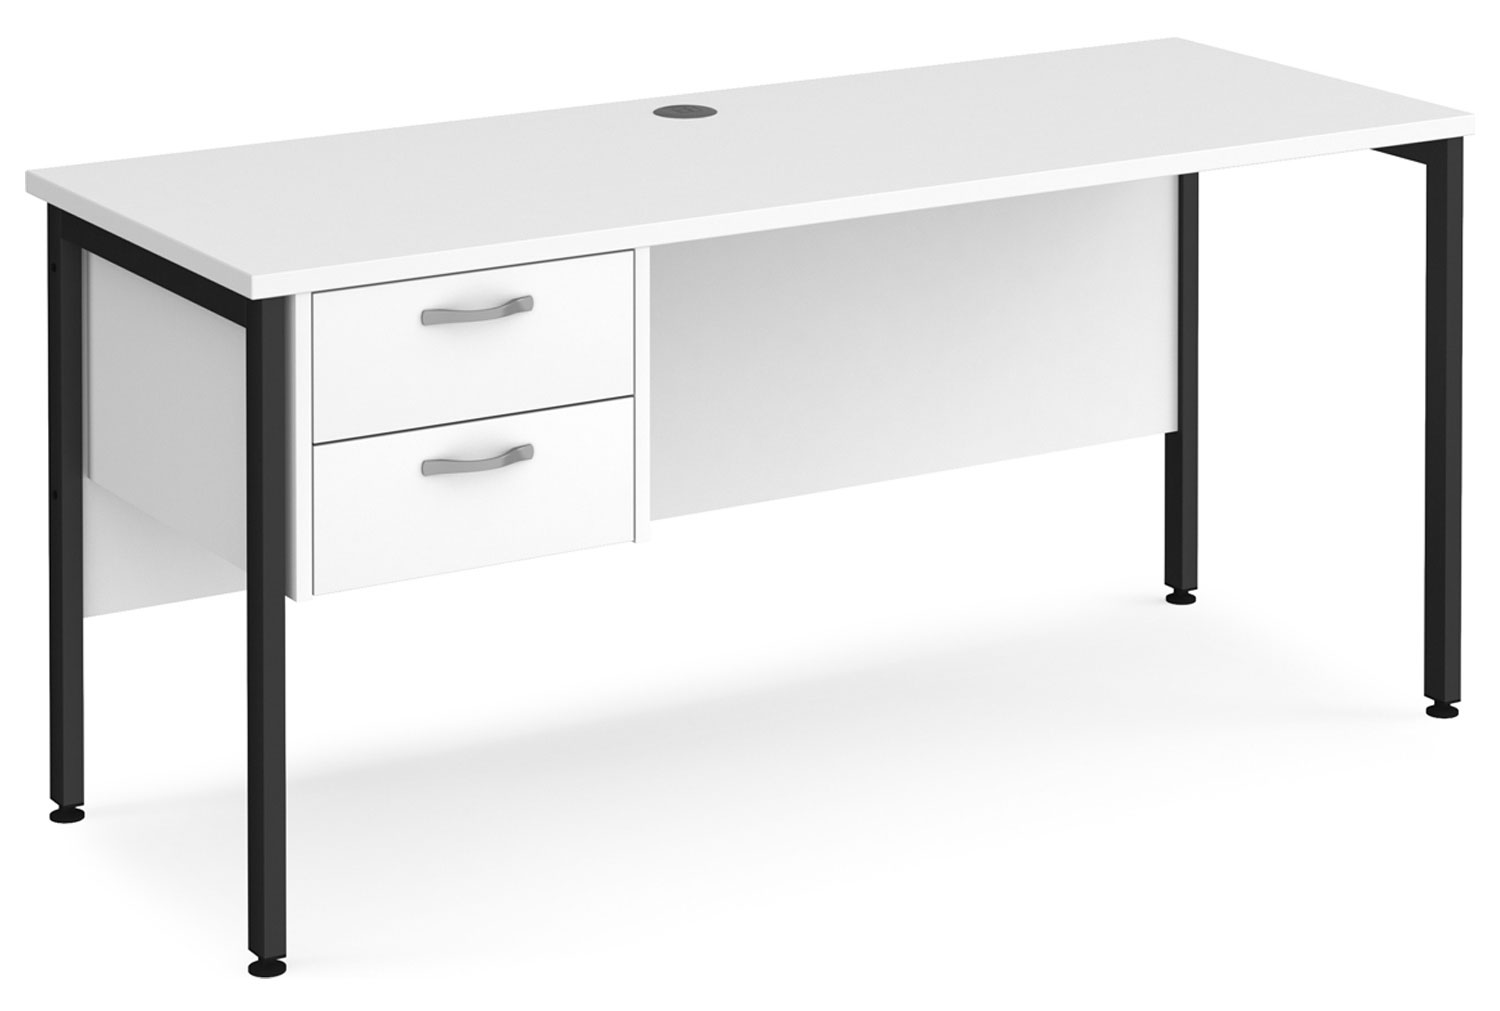 Value Line Deluxe H-Leg Narrow Rectangular Office Desk 2 Drawers (Black Legs), 160wx60dx73h (cm), White, Express Delivery